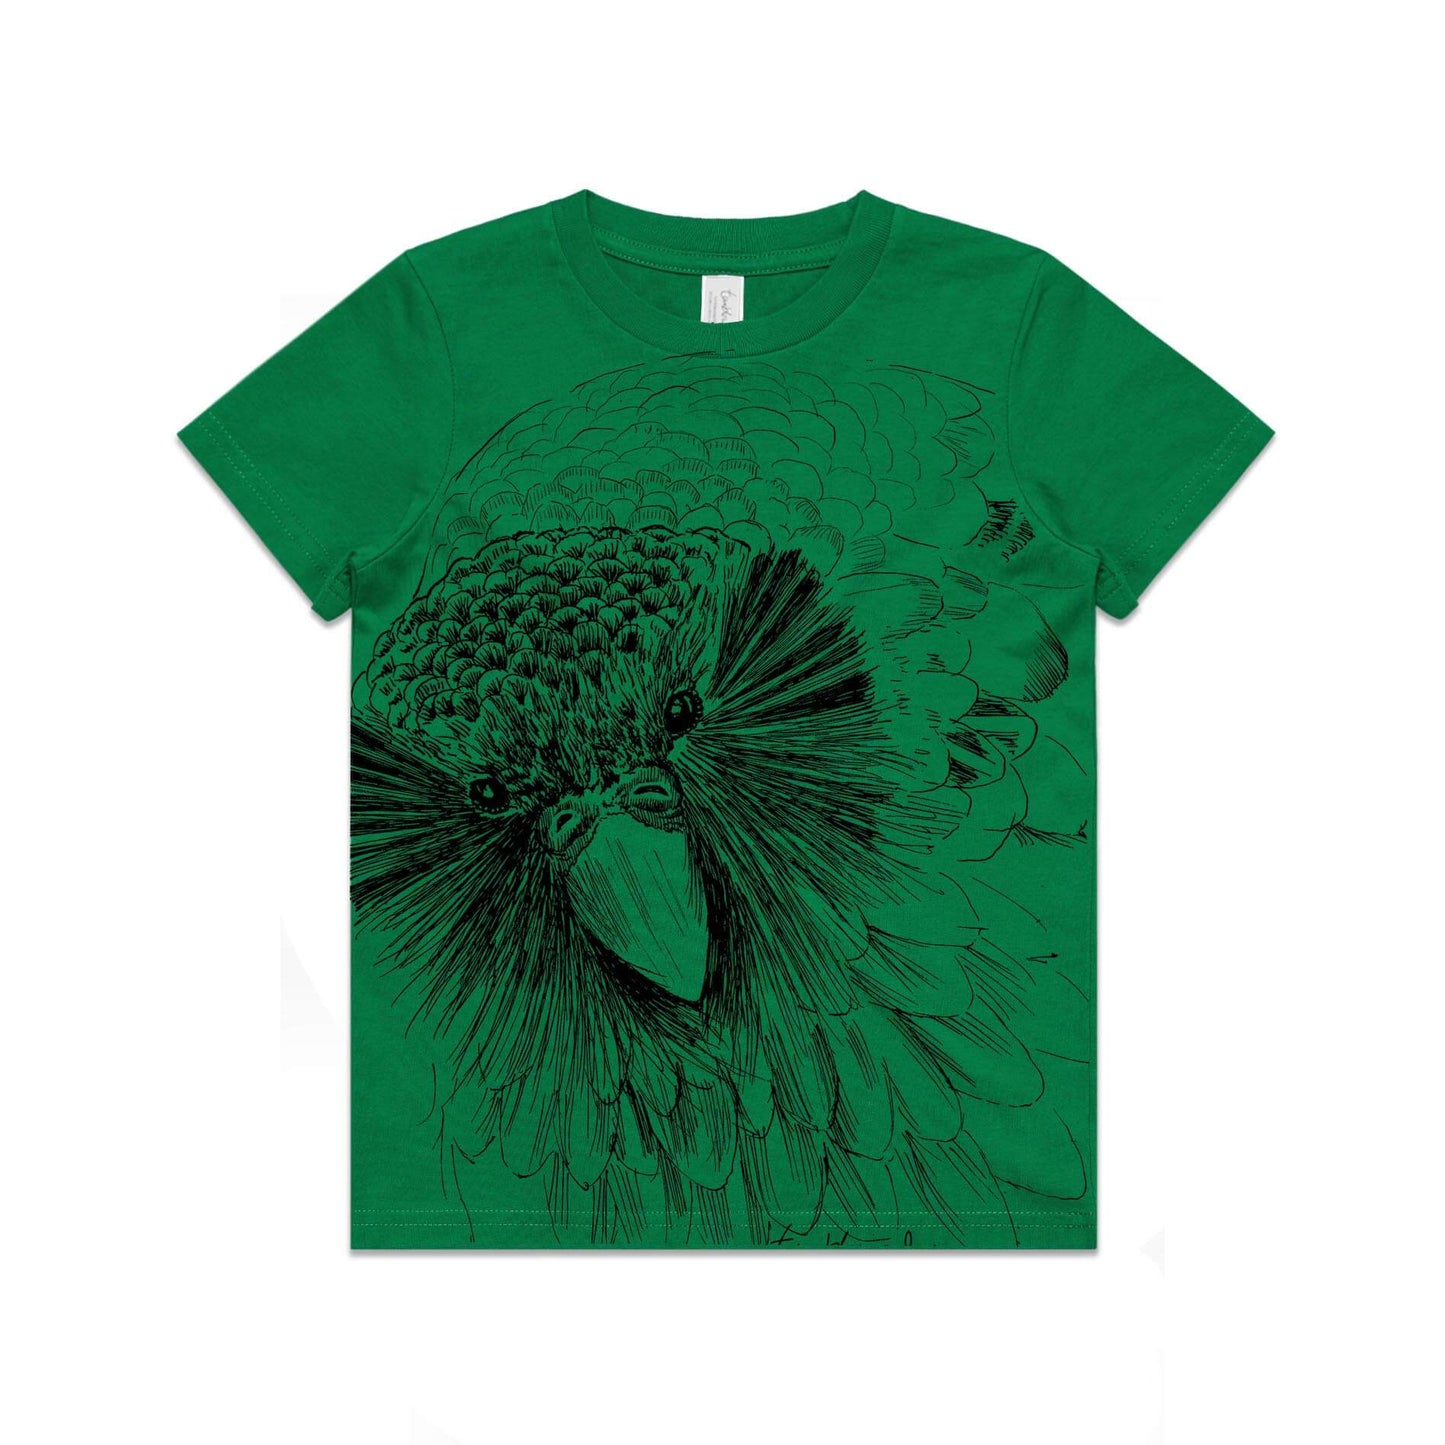 Green, cotton kids' t-shirt with screen printed Sirocco the Kakapo design.